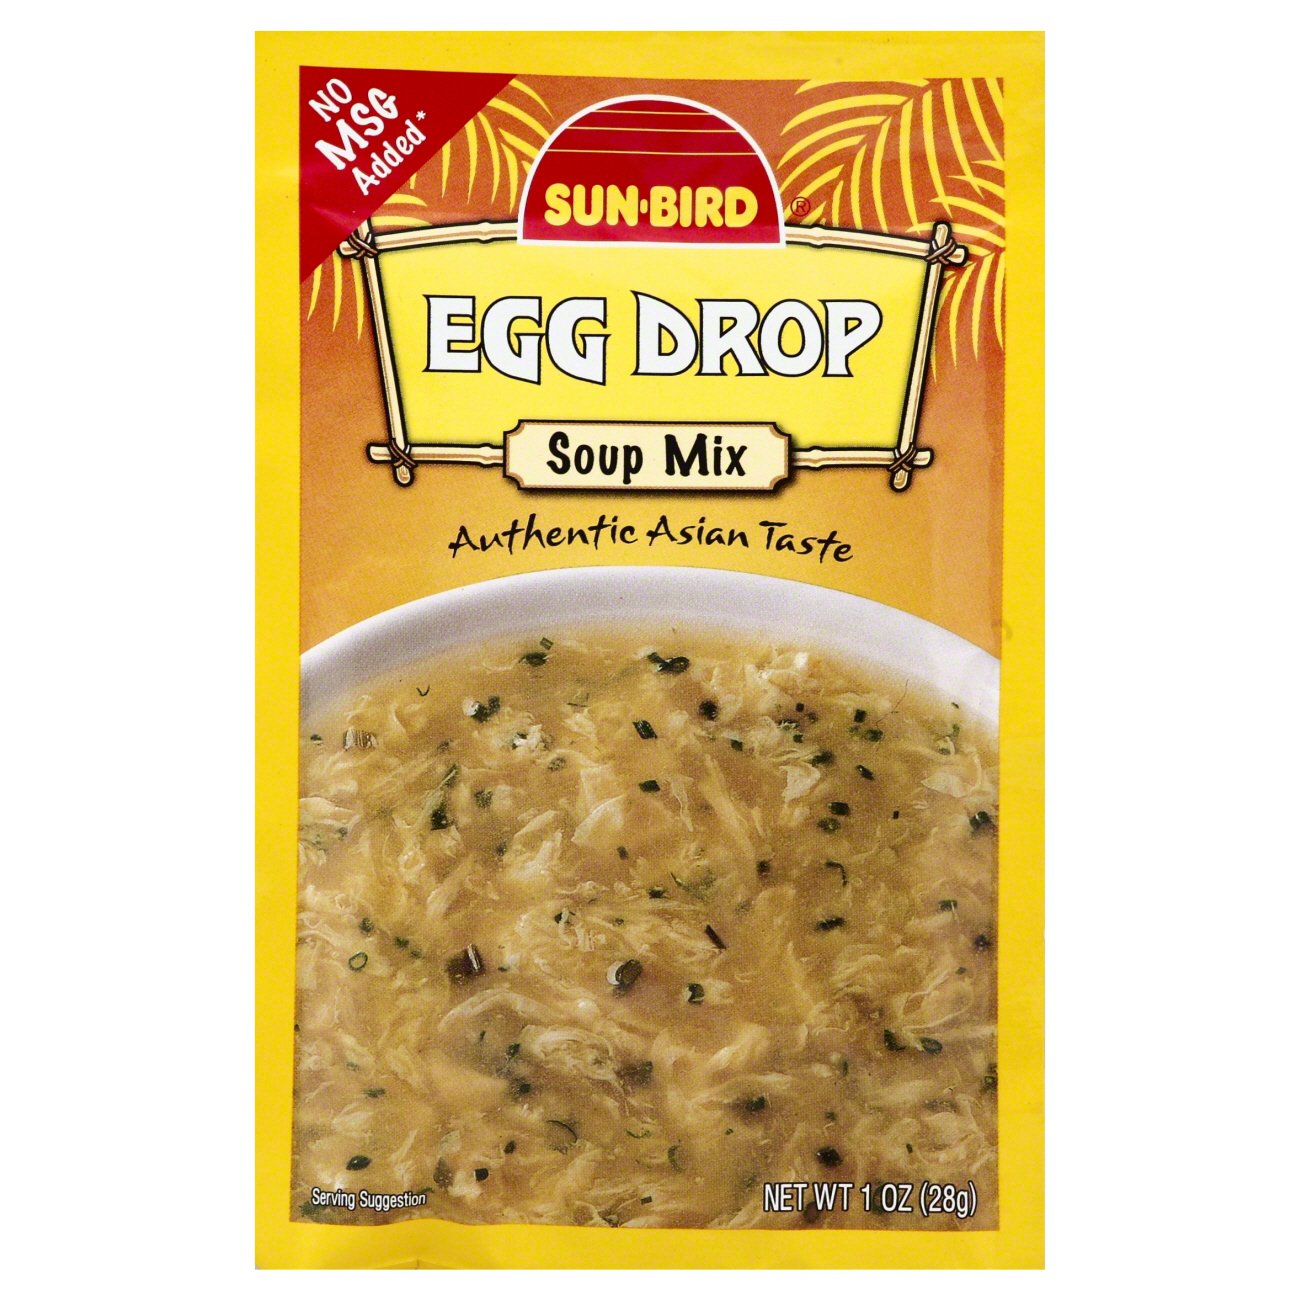 Sun Bird Egg Drop Soup Mix Shop Soups Chili At H E B